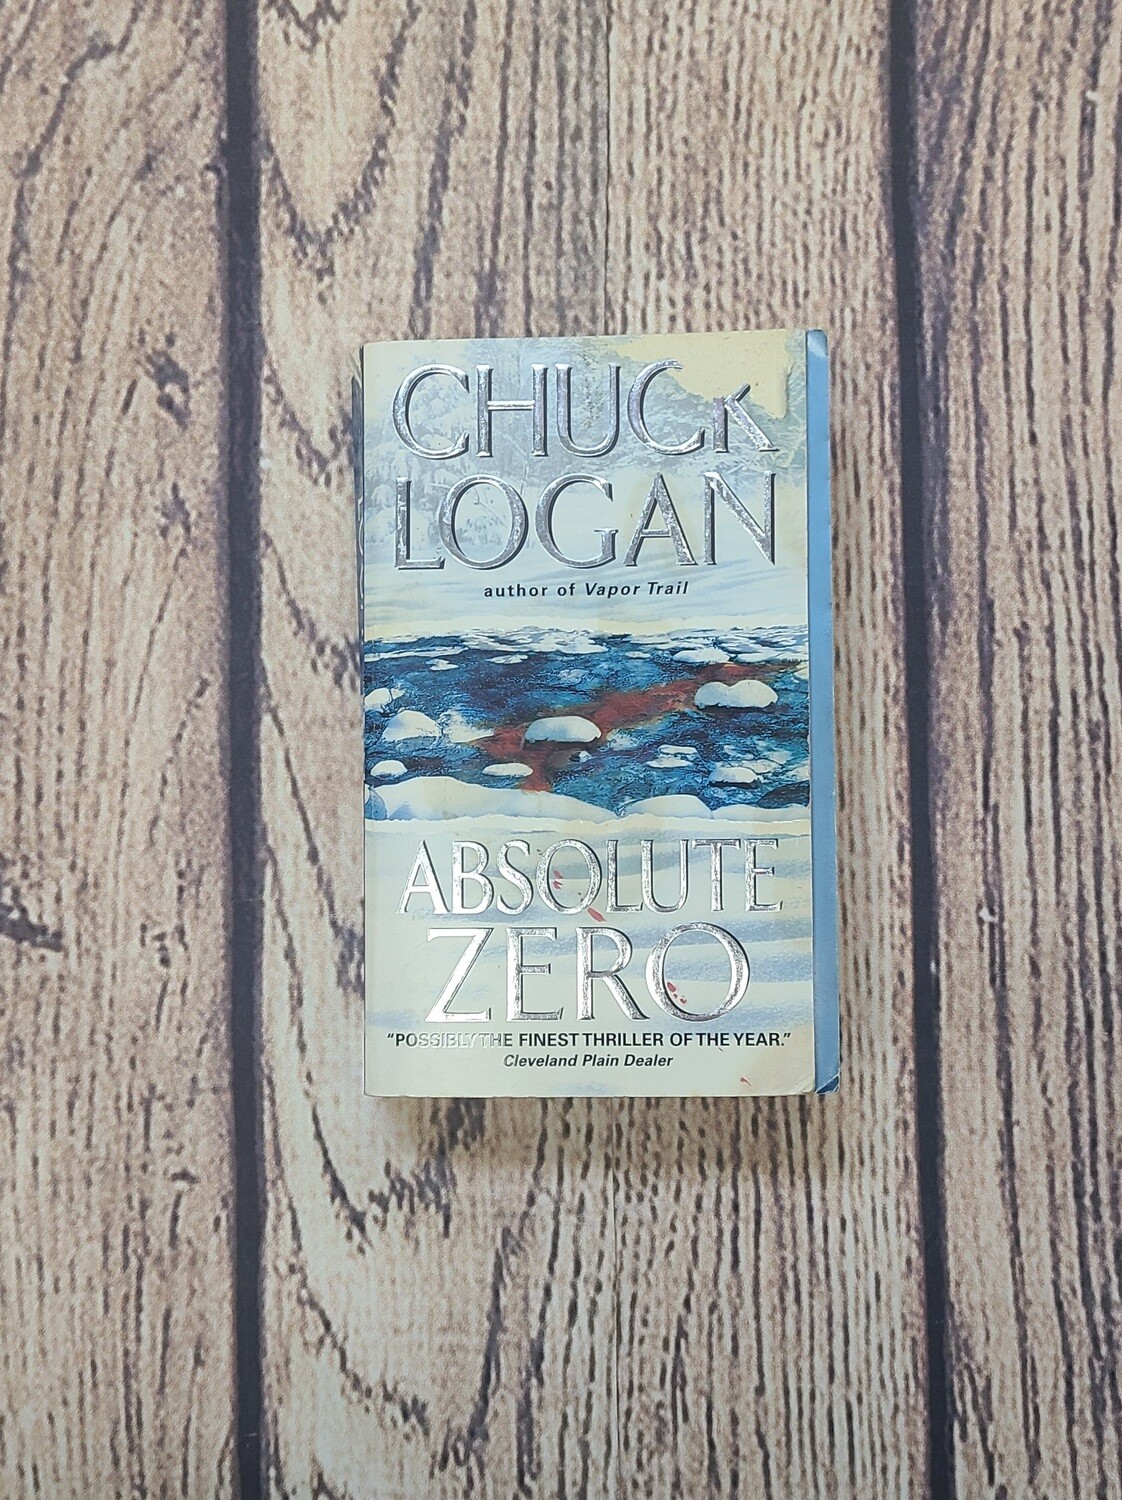 Absolute Zero by Chuck Logan